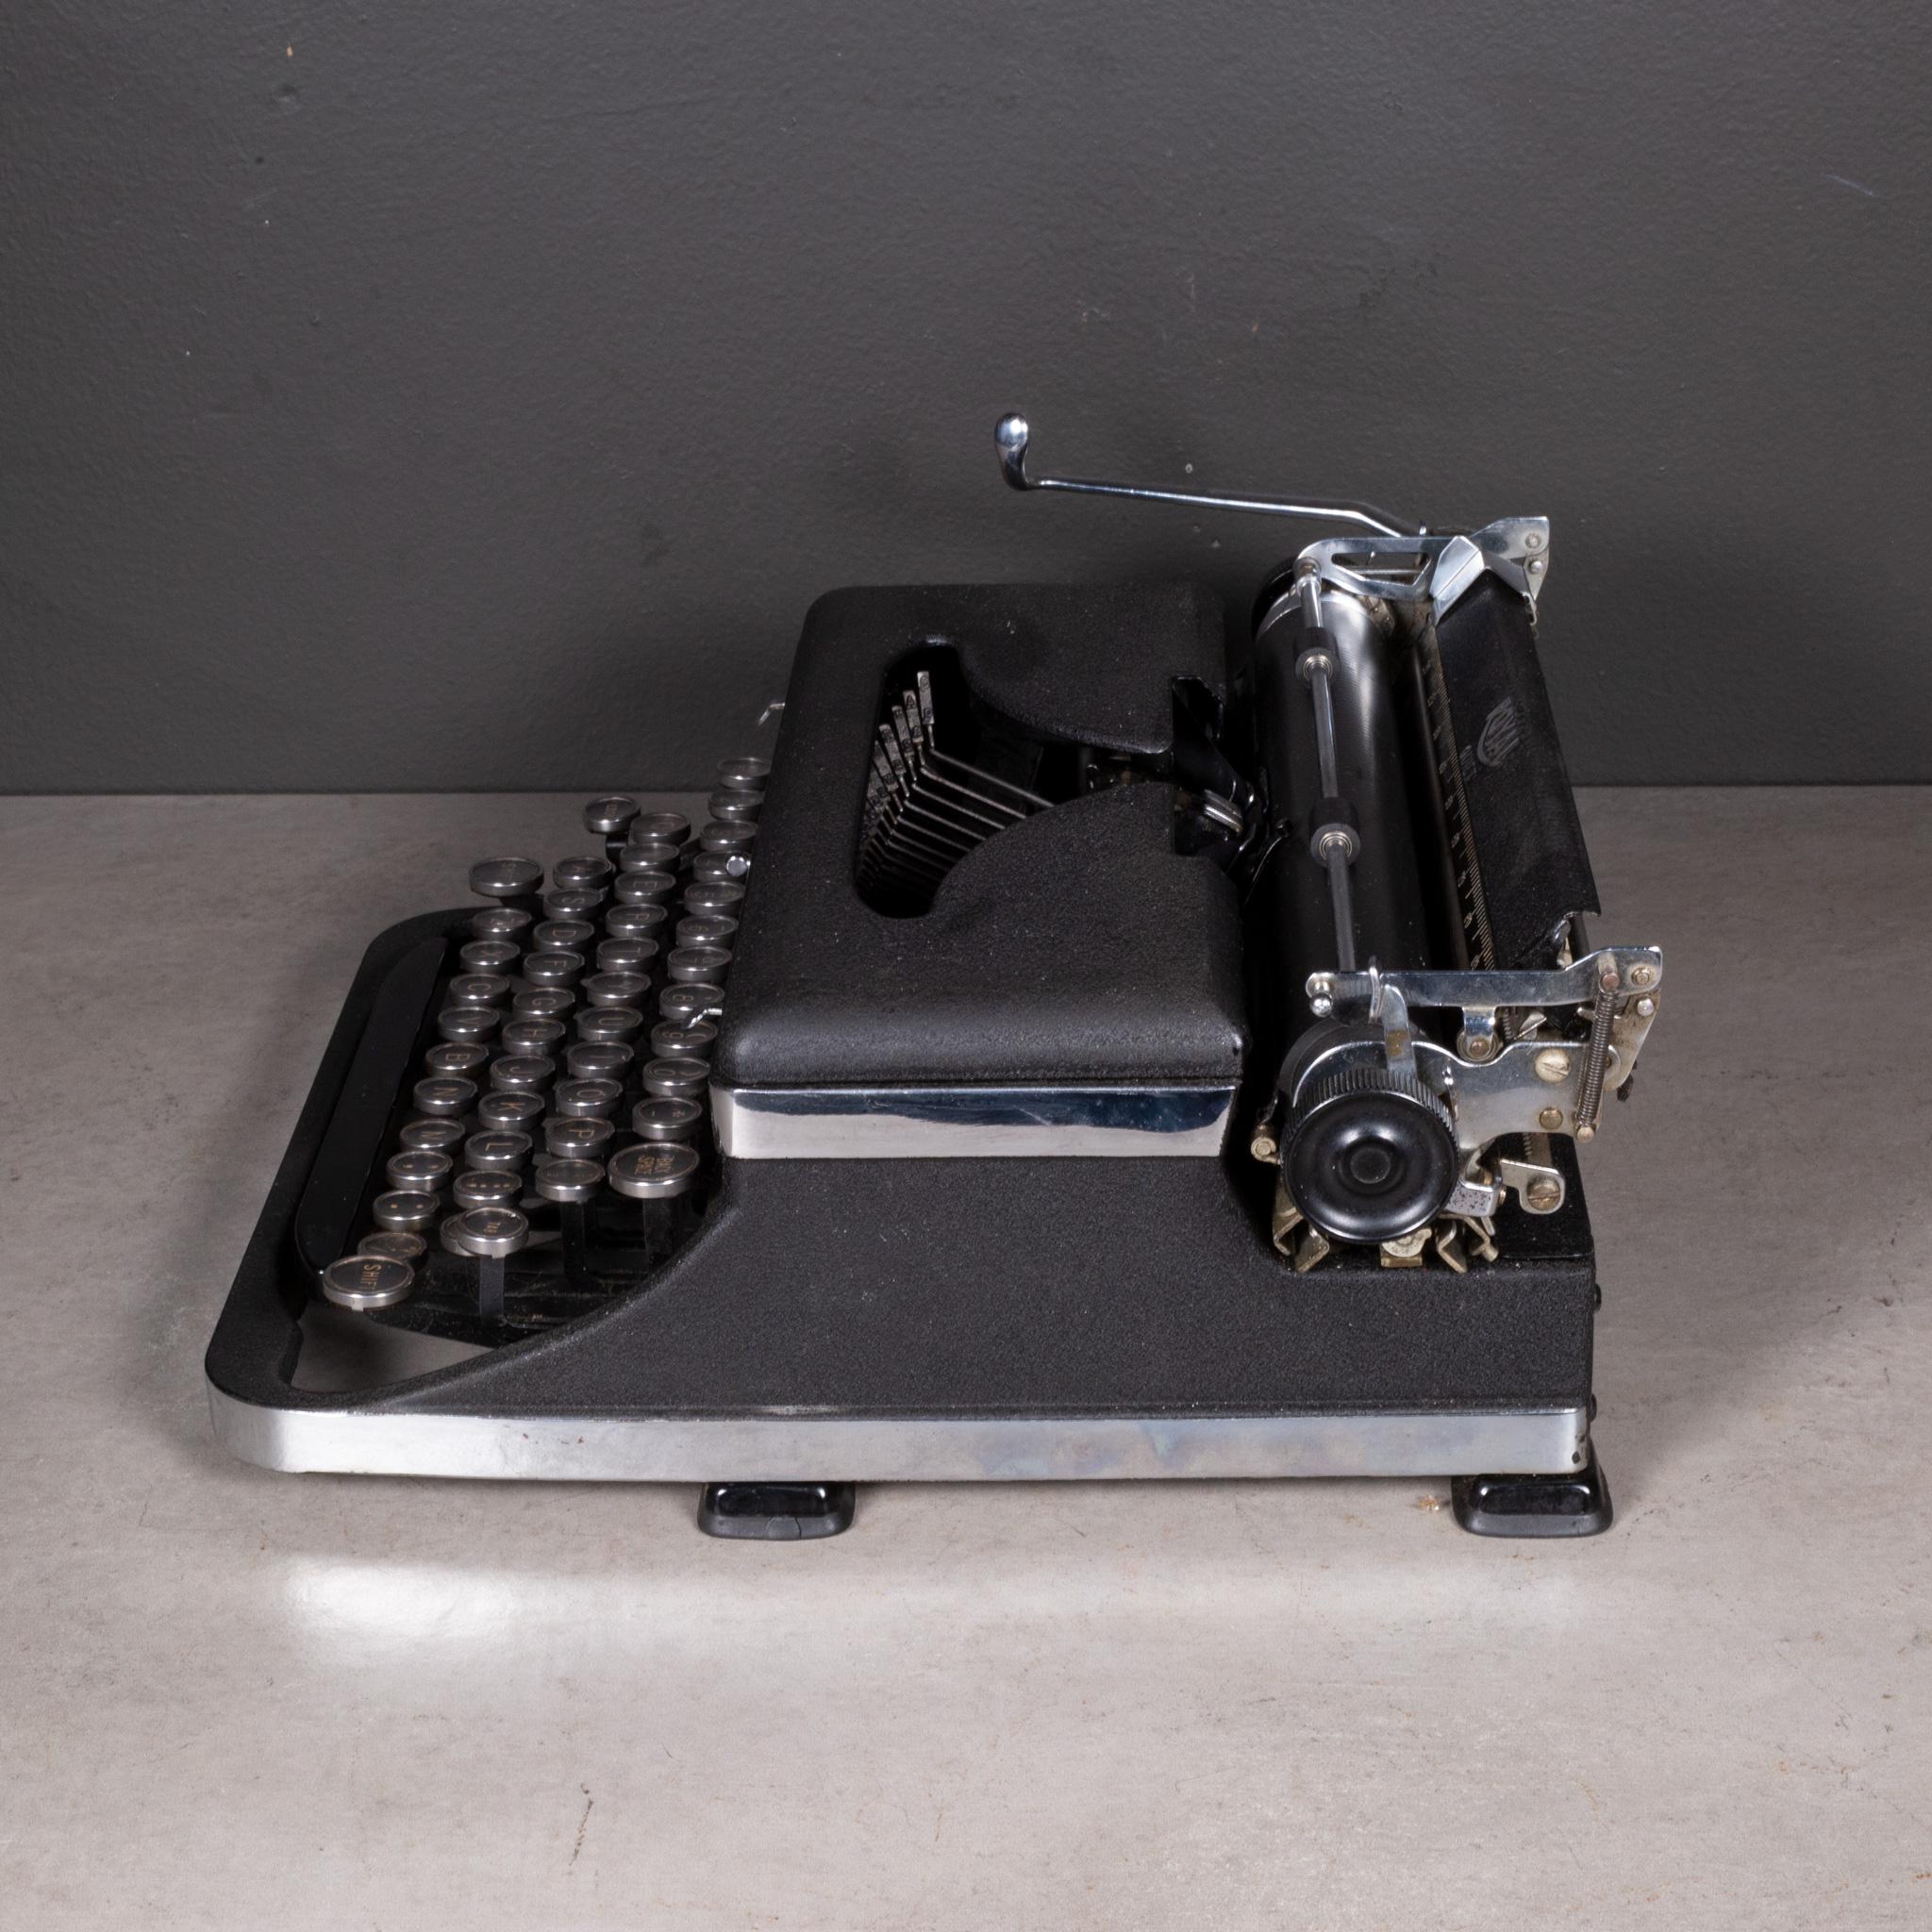 20th Century Antique Art Deco Royal Portable Typewriter c.1935